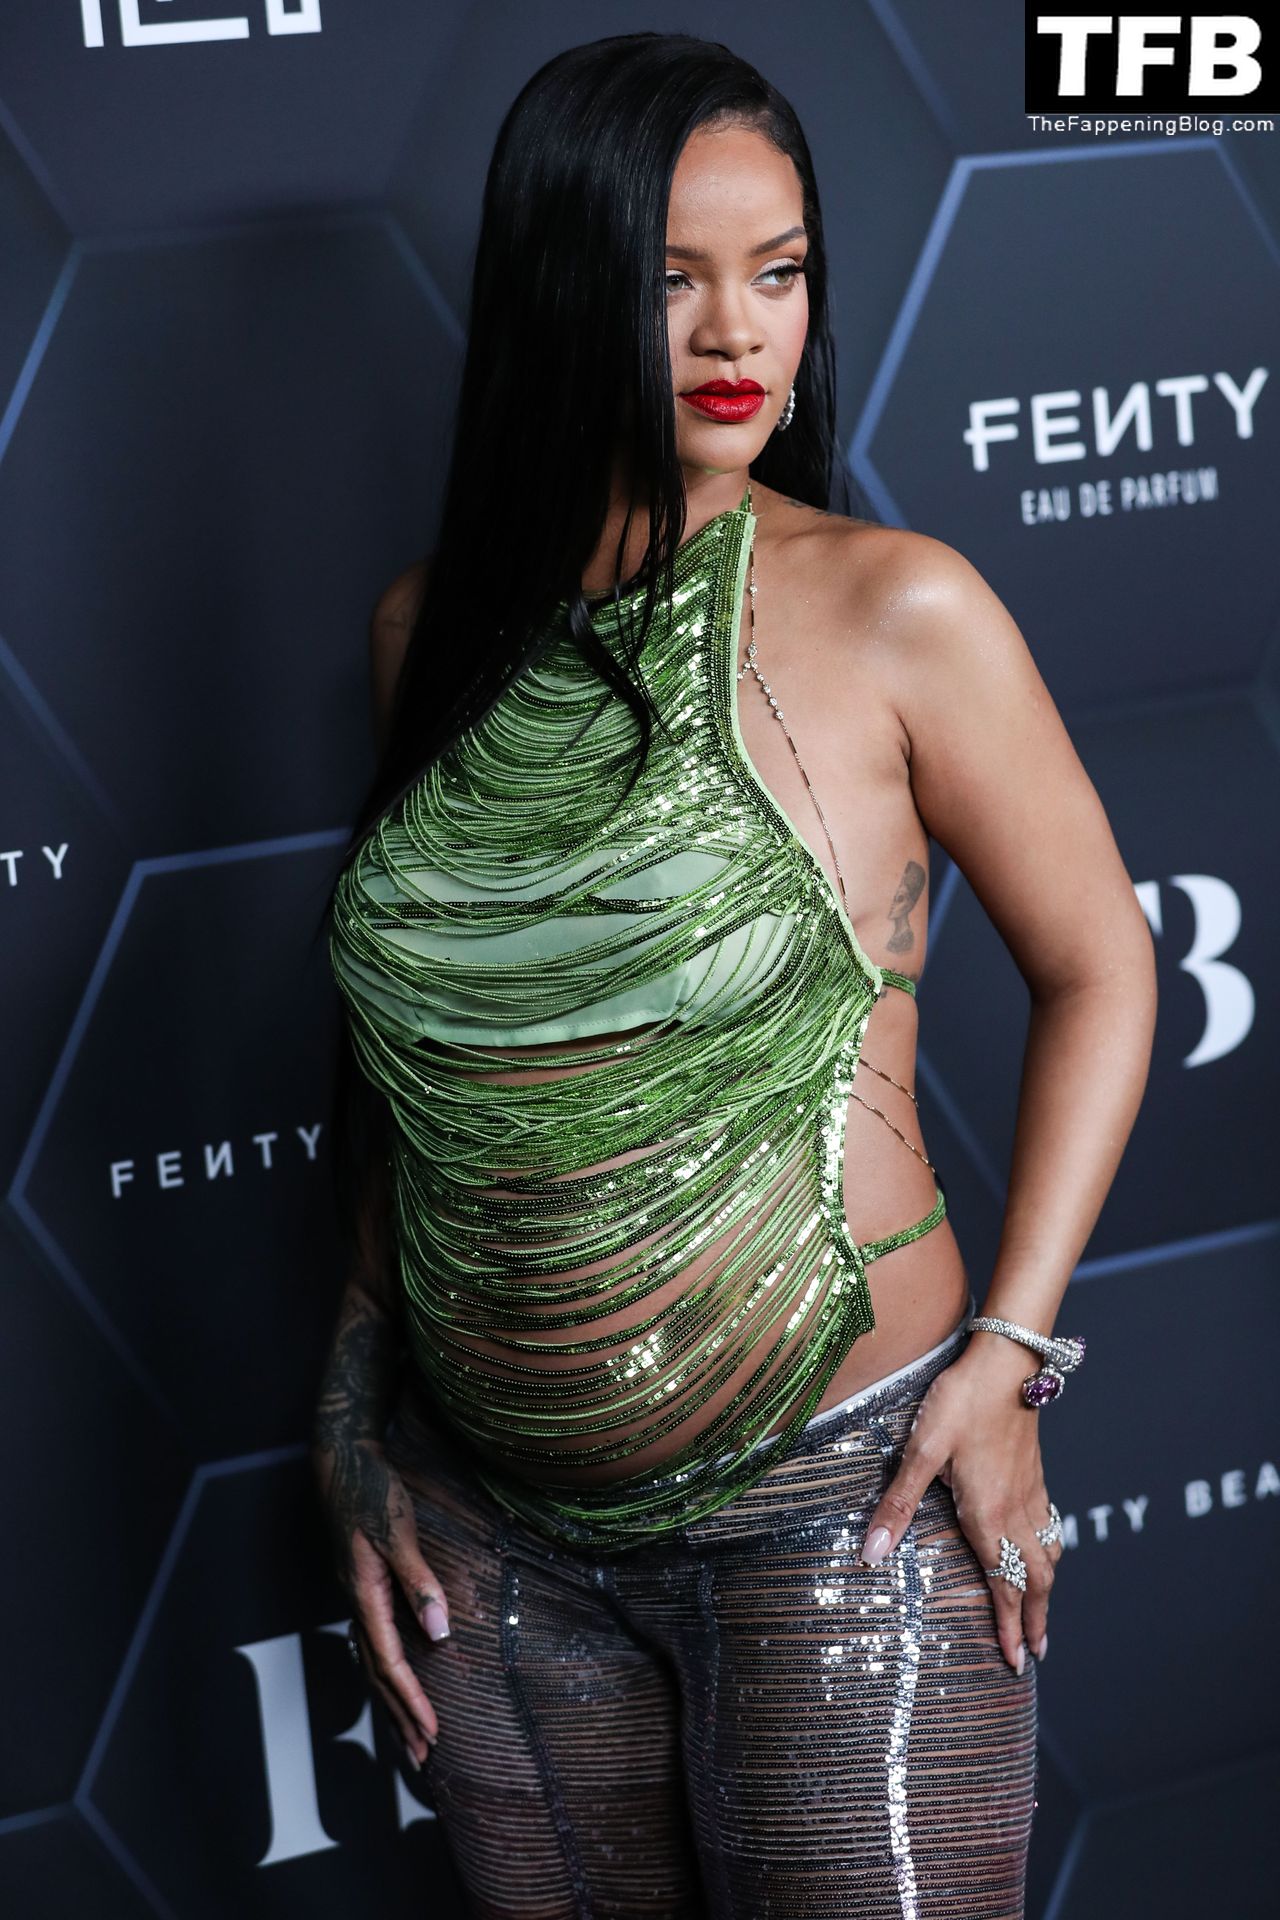 Rihanna-Sexy-The-Fappening-Blog-112.jpg